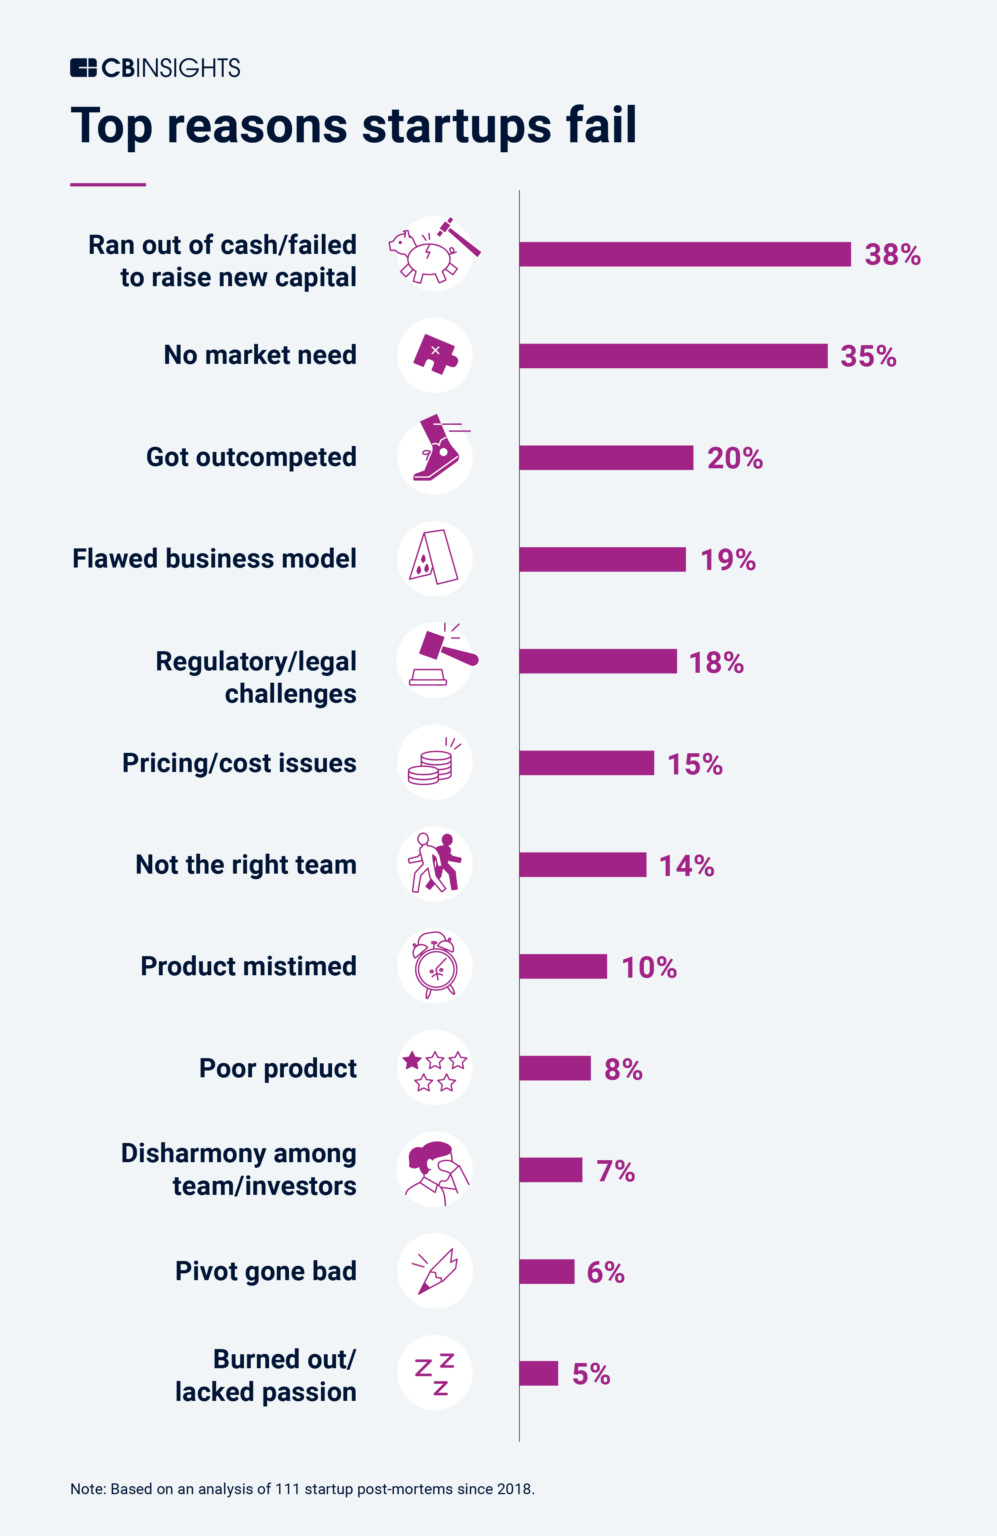 Top reasons startup fail